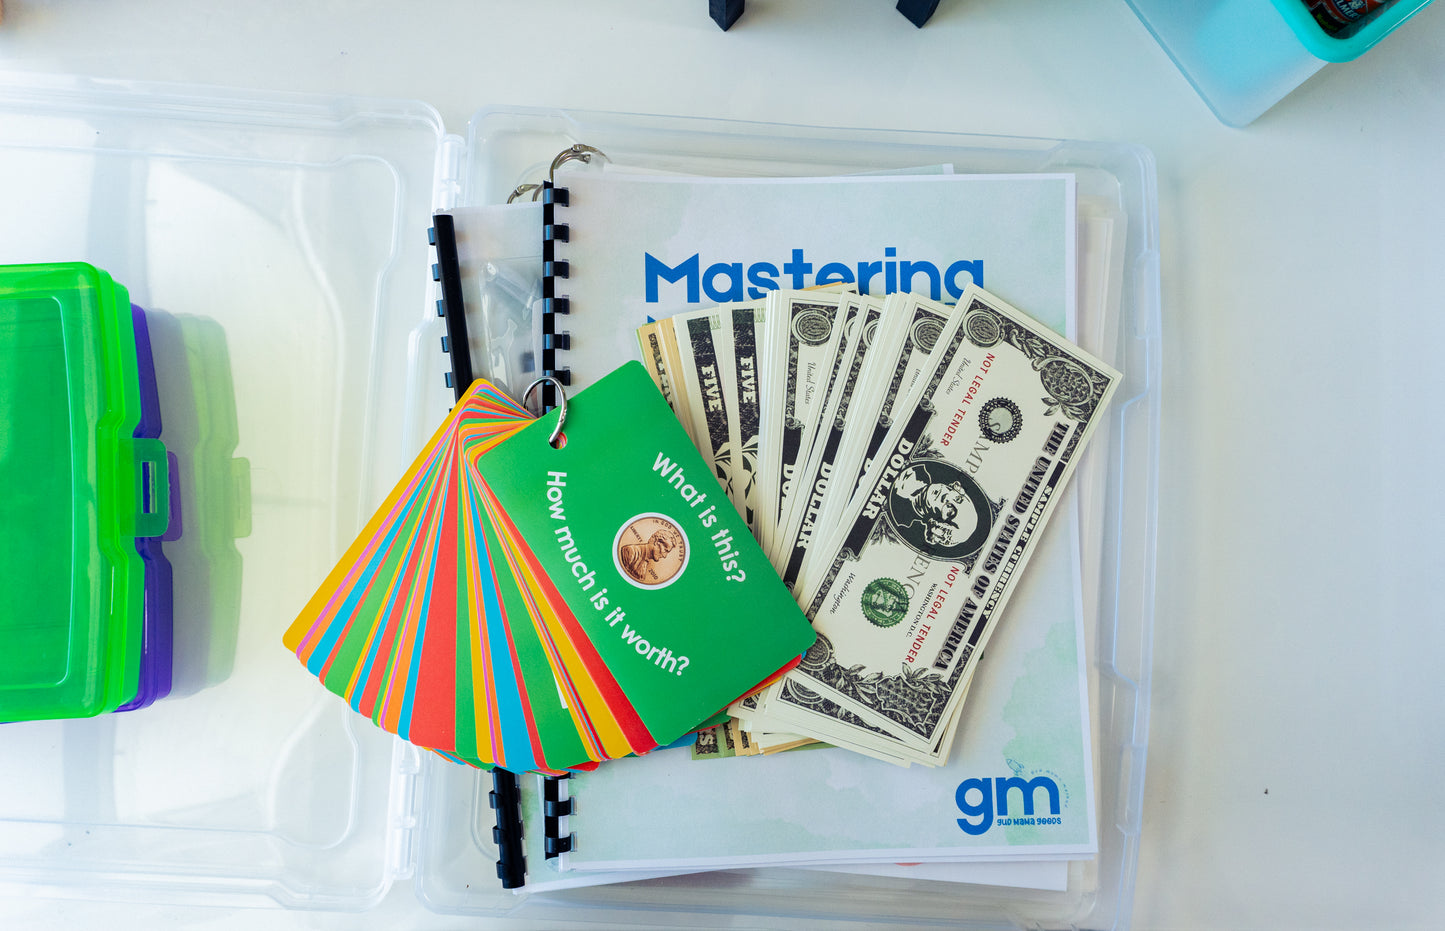 Mastering Money Unit Lesson Kit, Money Math Learning Curriculum